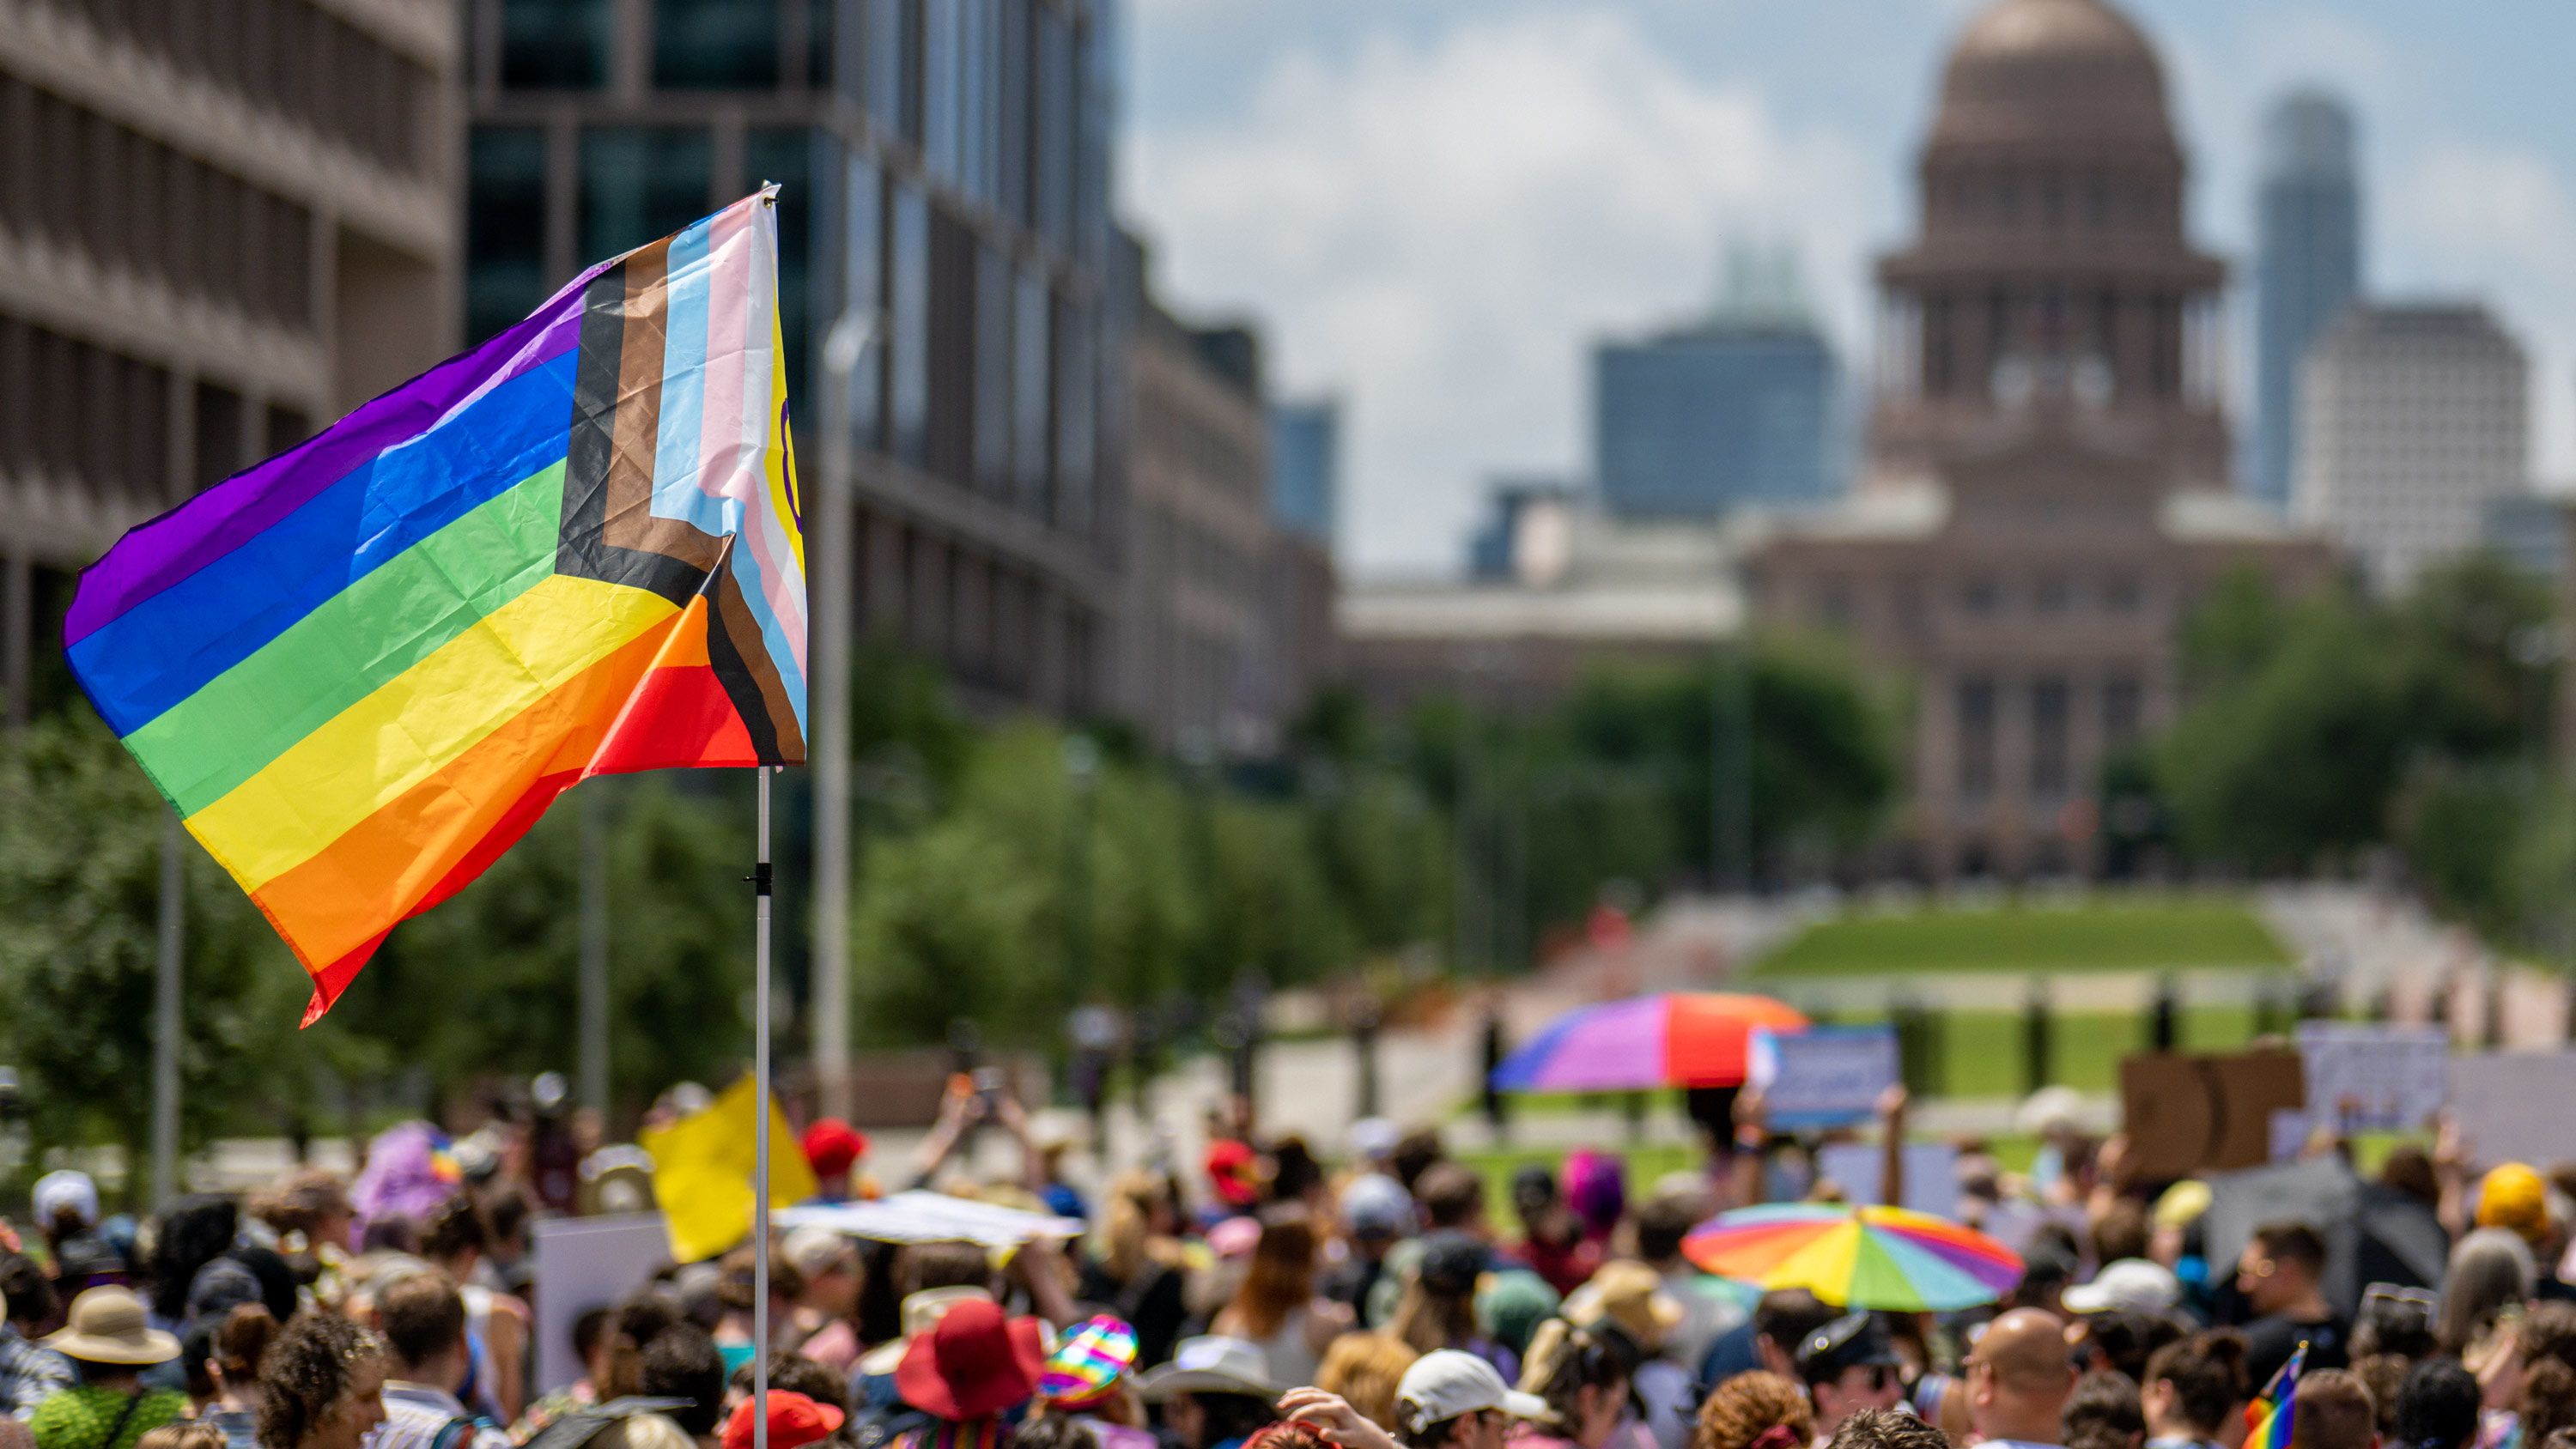 Trump-allied law firm sues Target over LGBTQ Pride displays